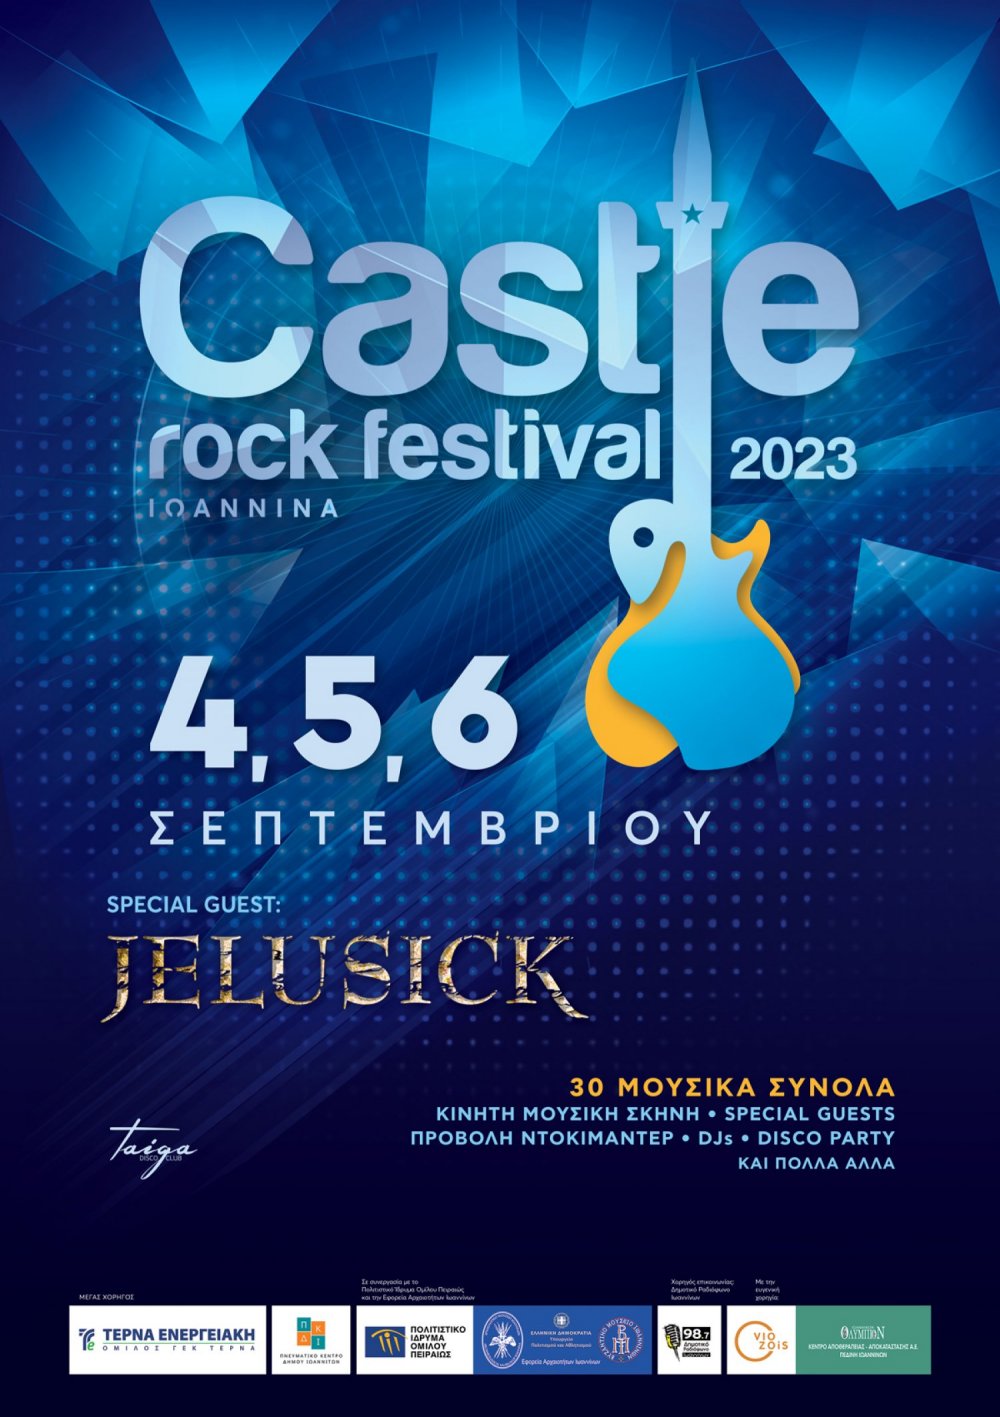 7th Castle Rock Festival-4, 5, 6 Σεπτεμβρίου 